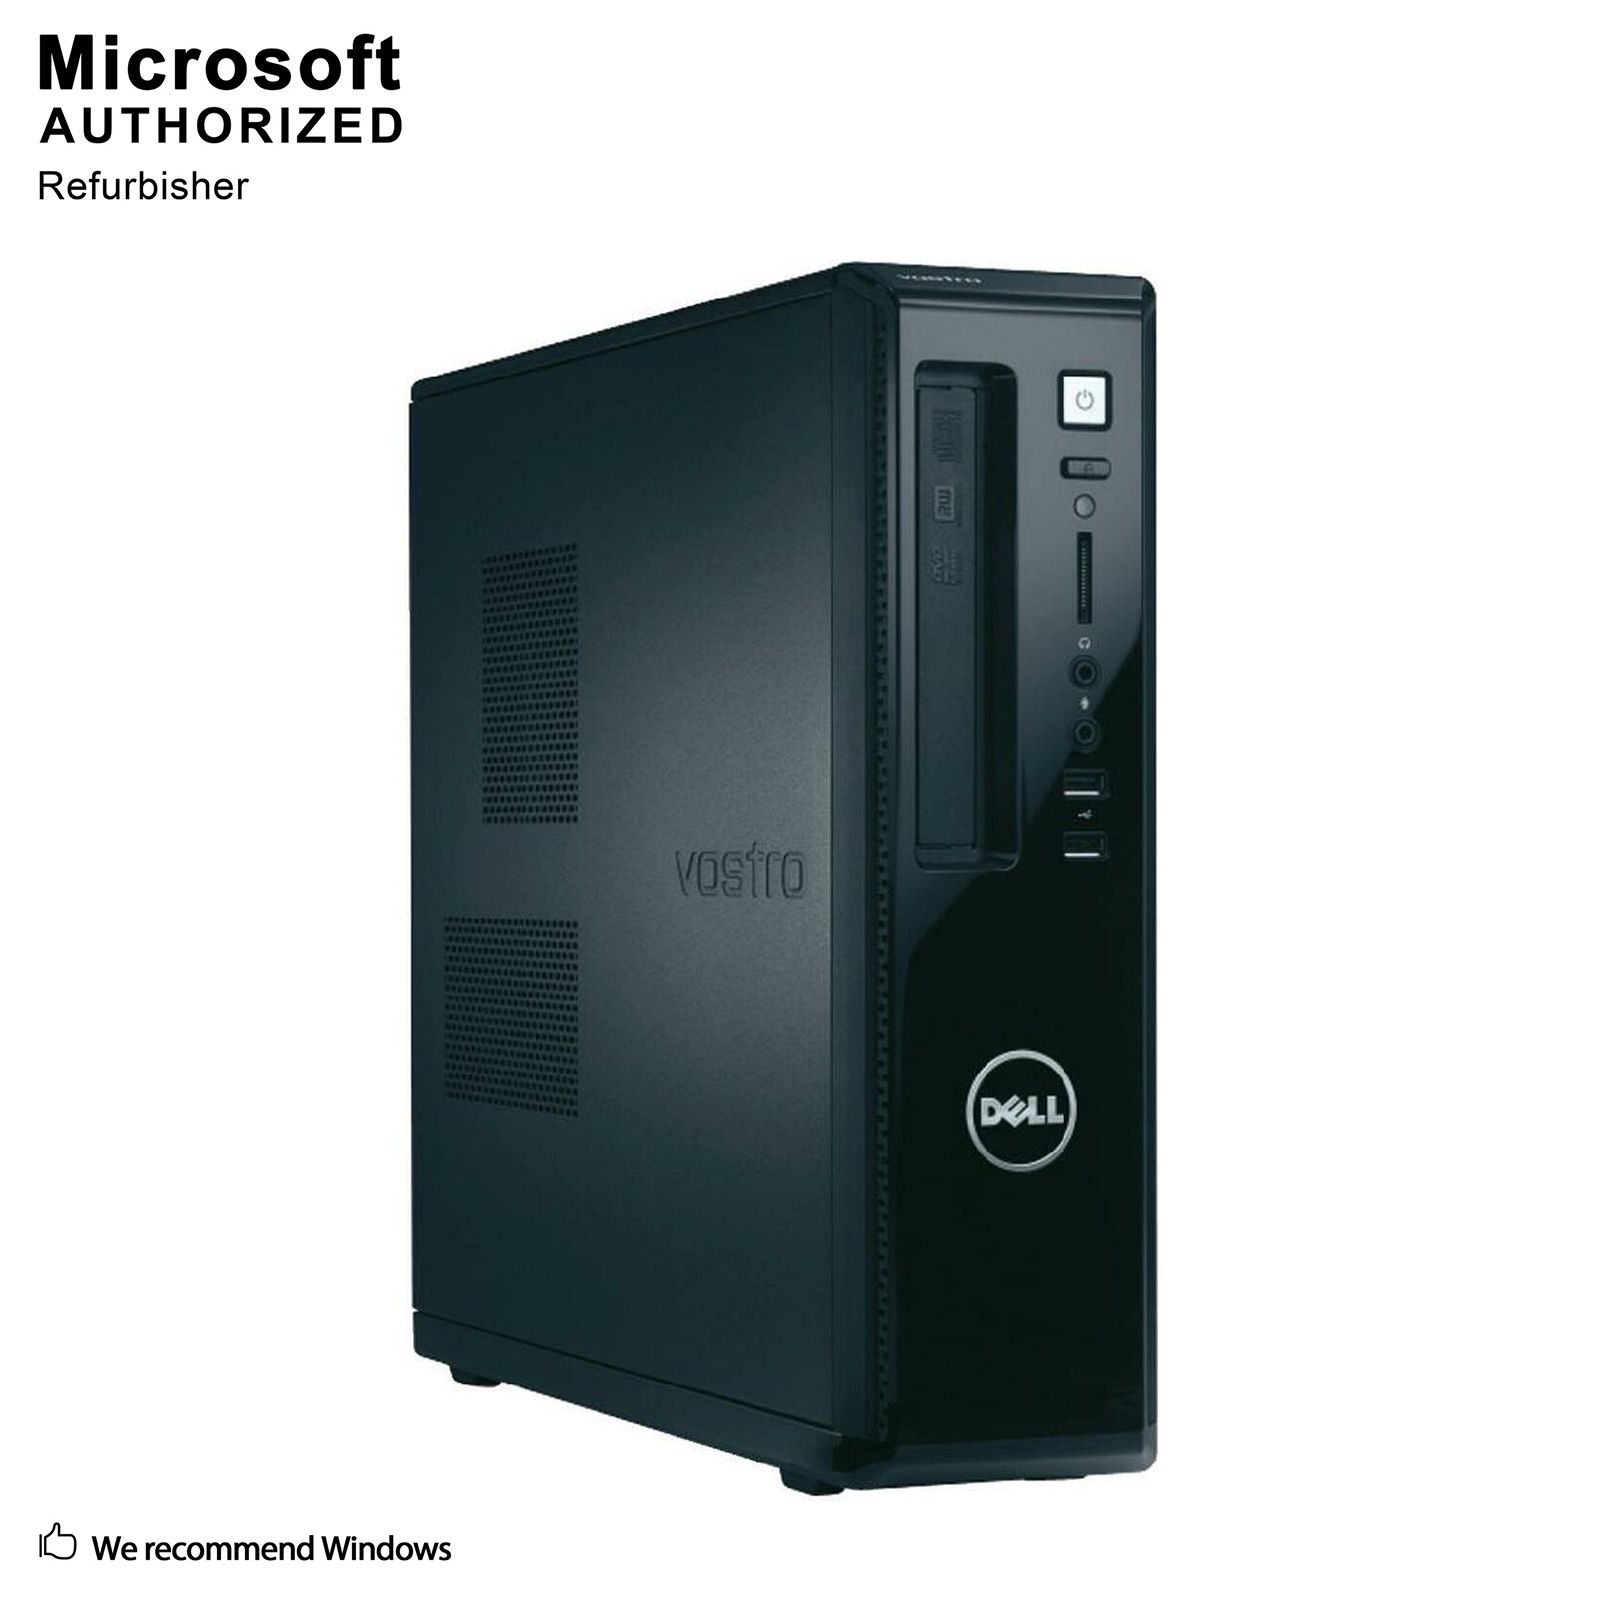 Dell 390 Desktop Computer Intel Core i7 2600 3.4GHz 8GB DDR3 Ram 500GB Hard  Drive DVD Windows 10 Pro (Renewed)